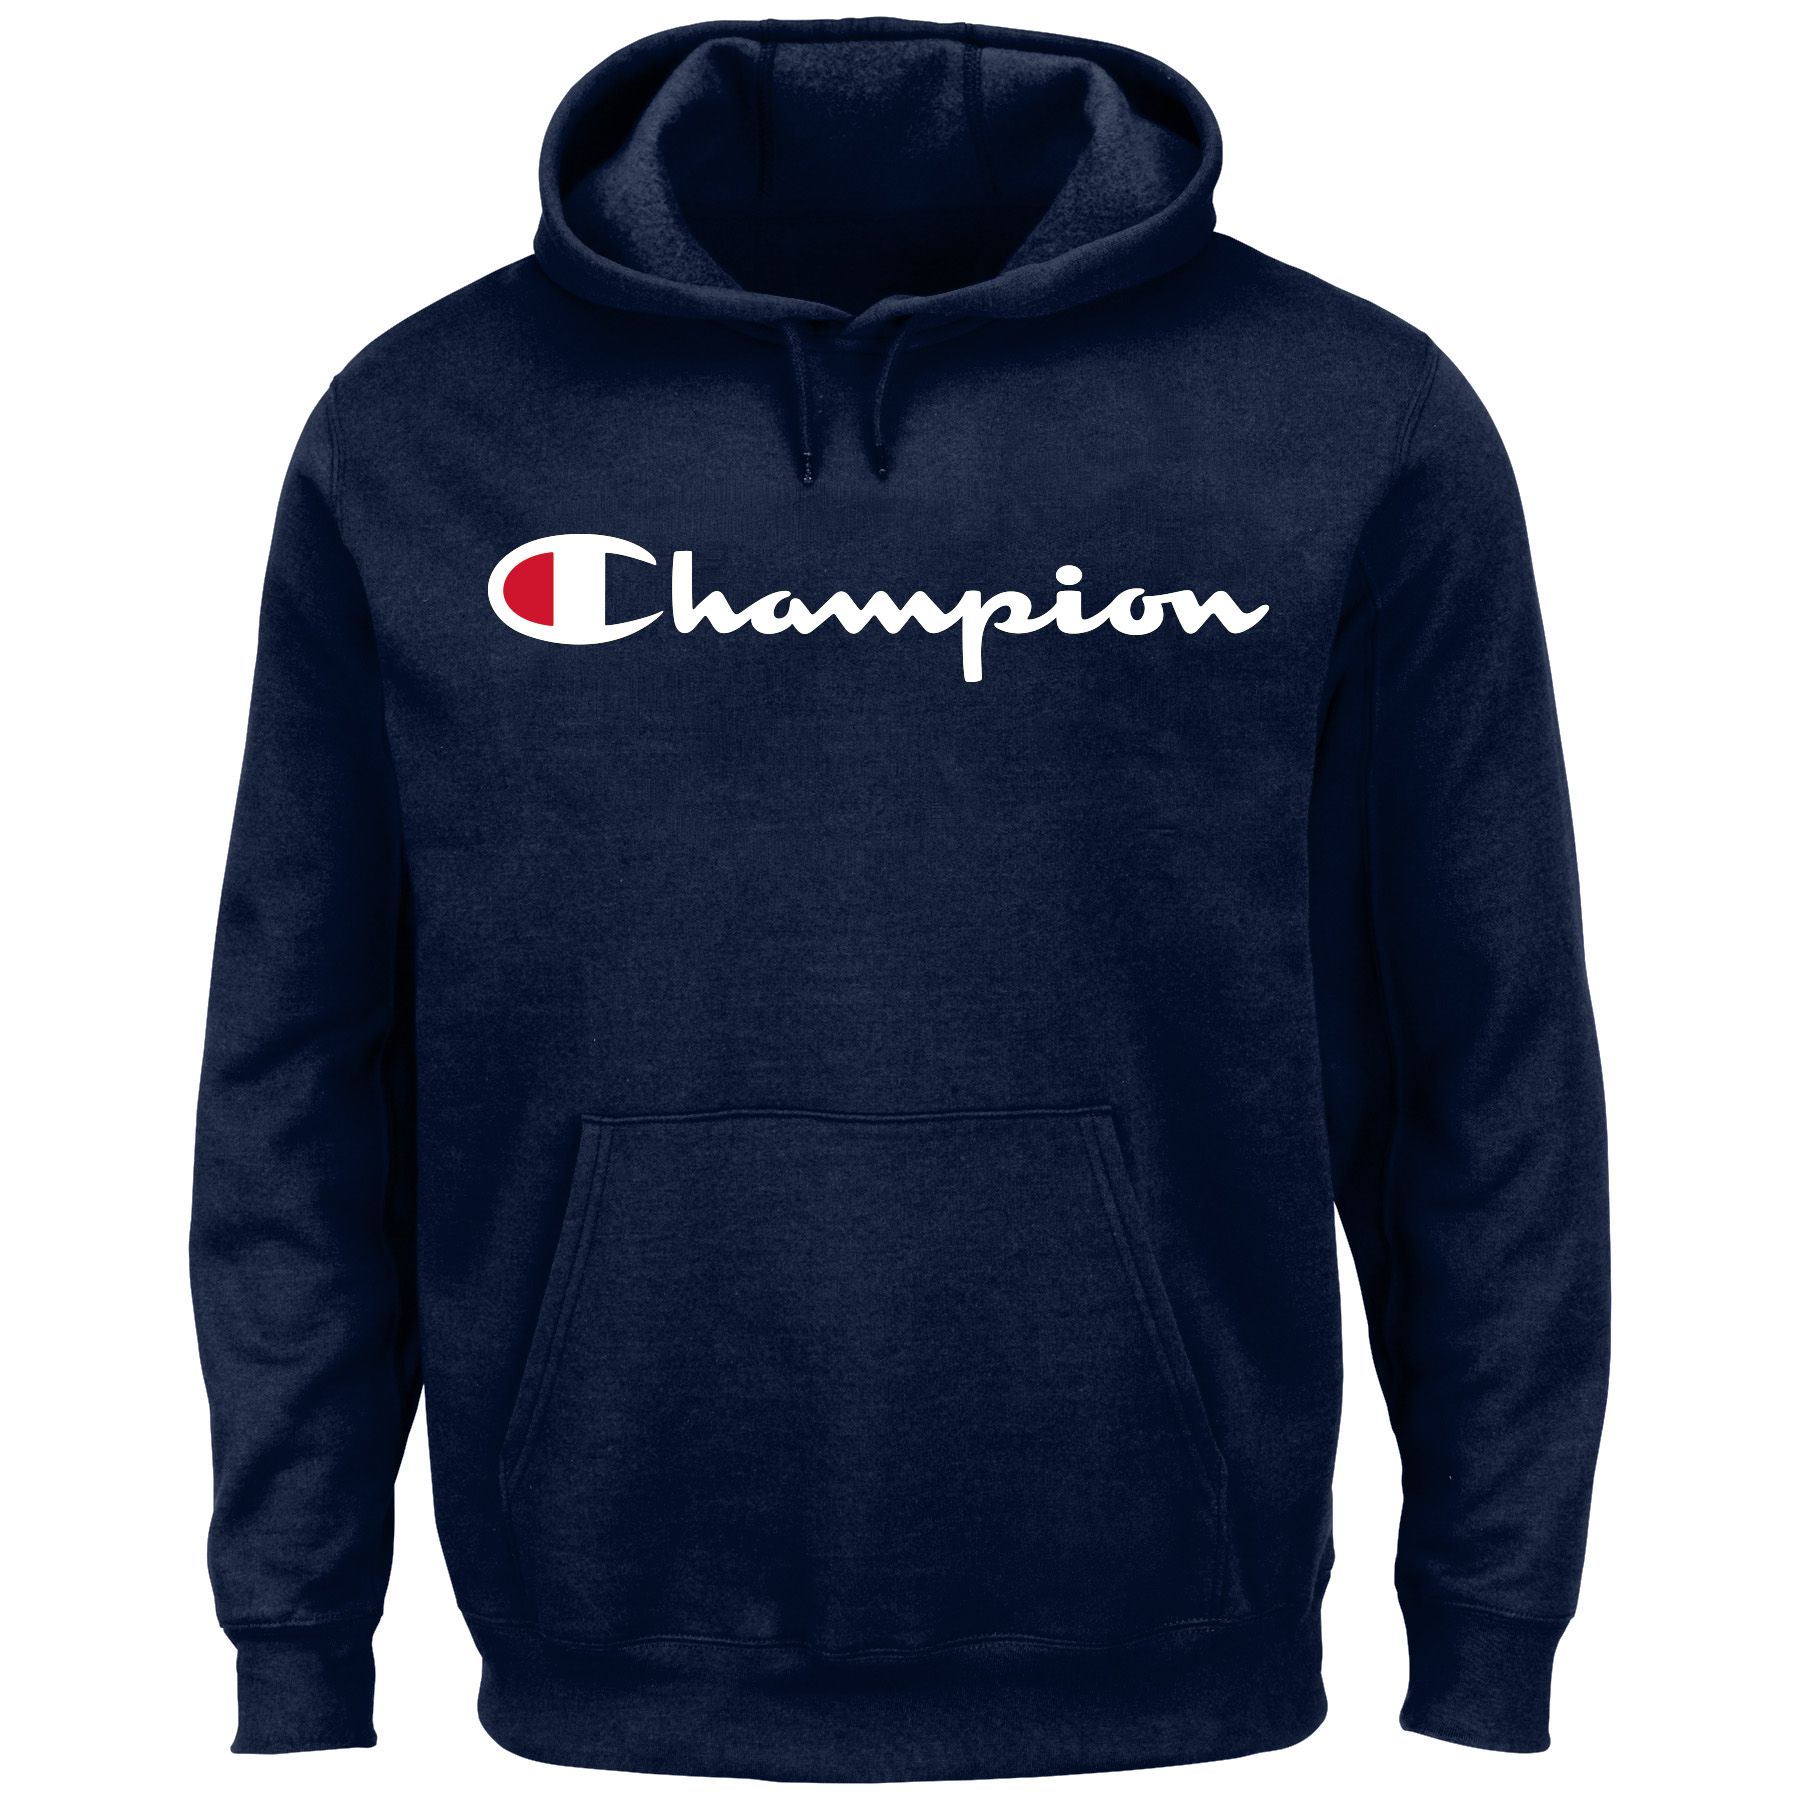 champion hoodies dicks